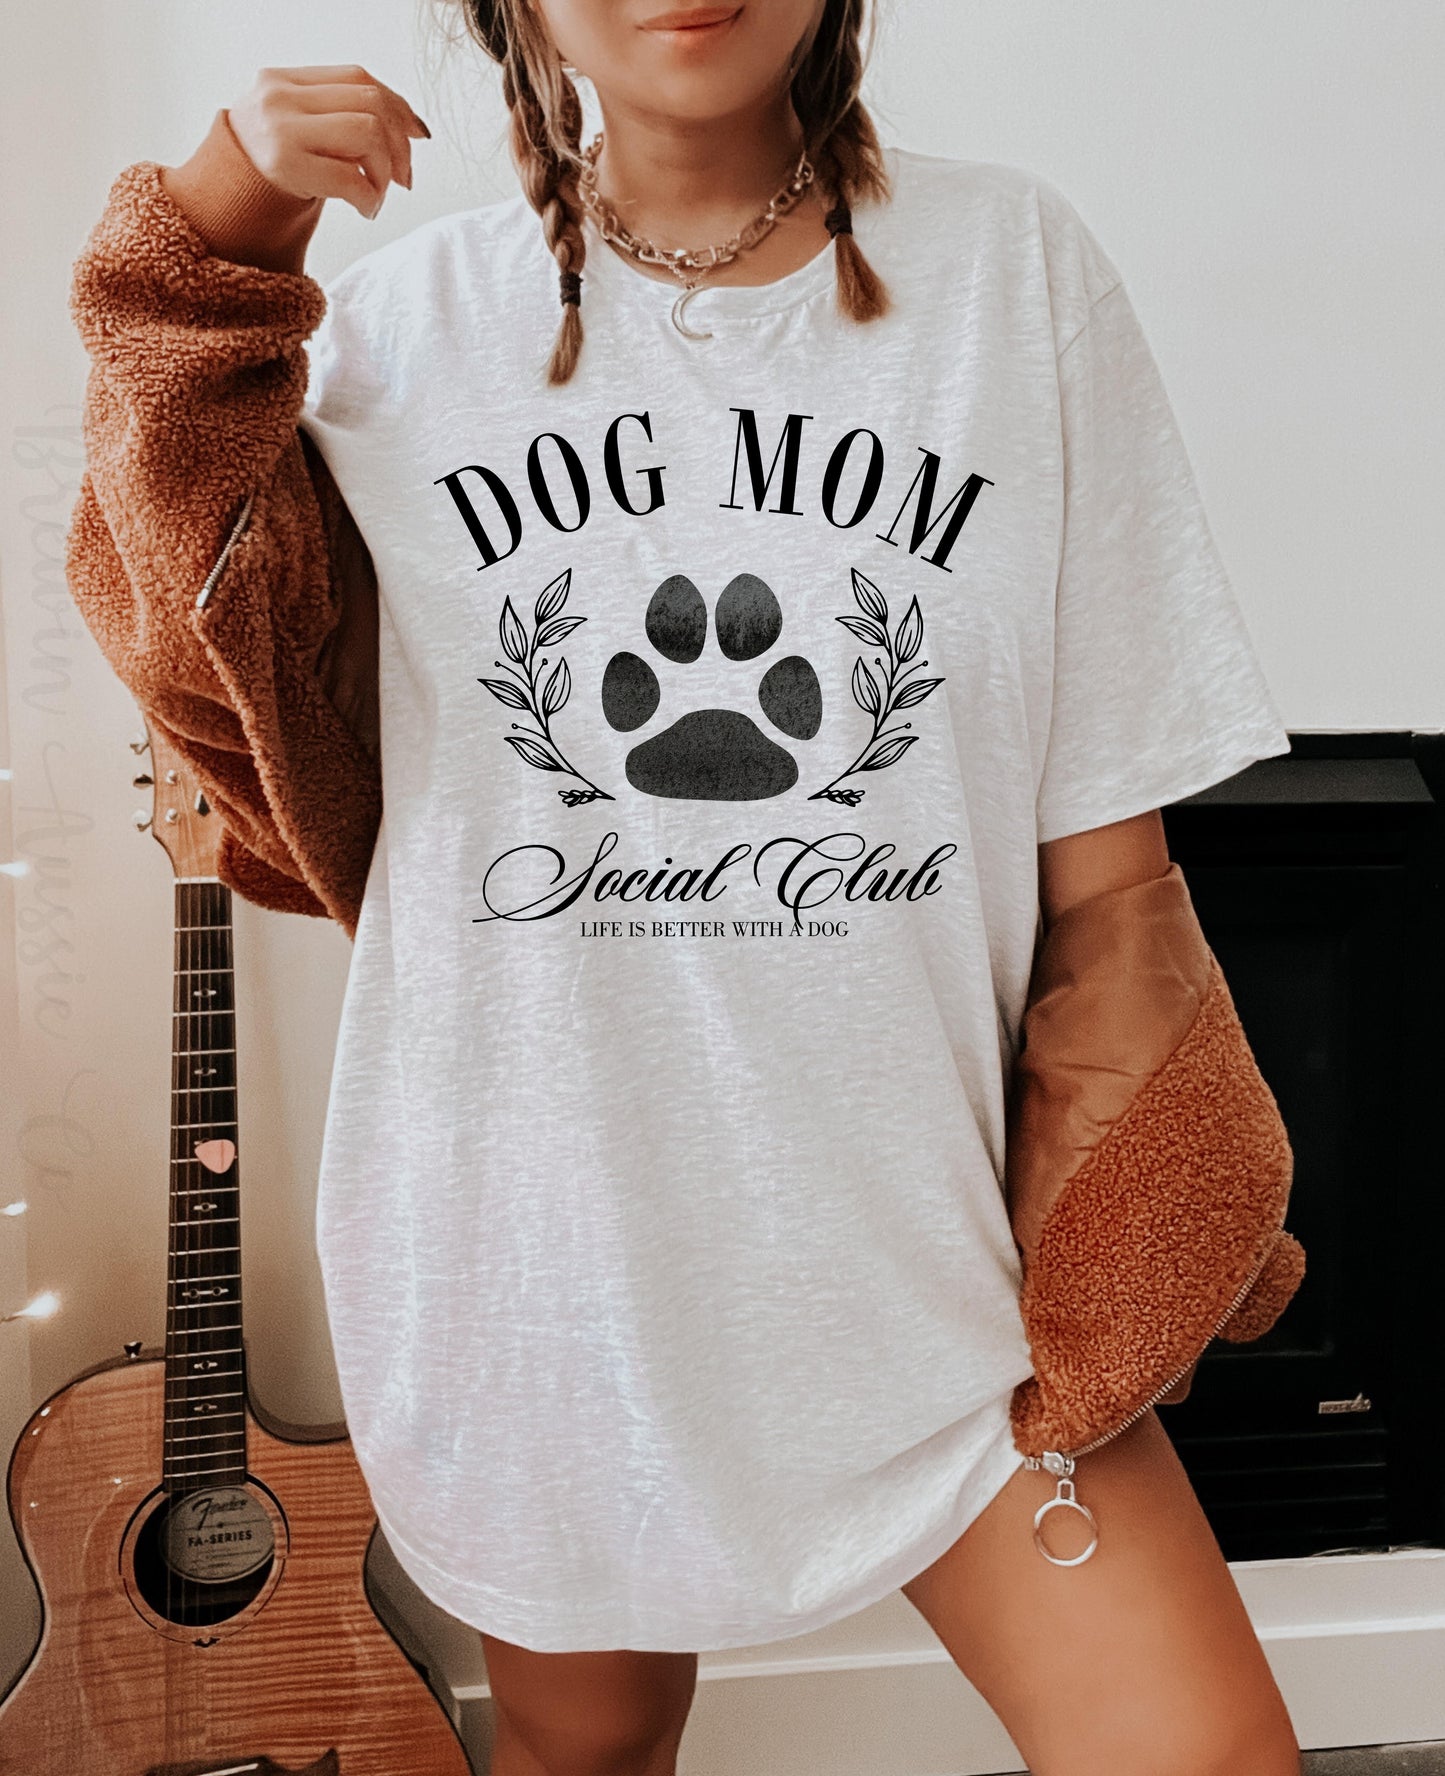 **PREORDER** Dog Mom Social Club Tee